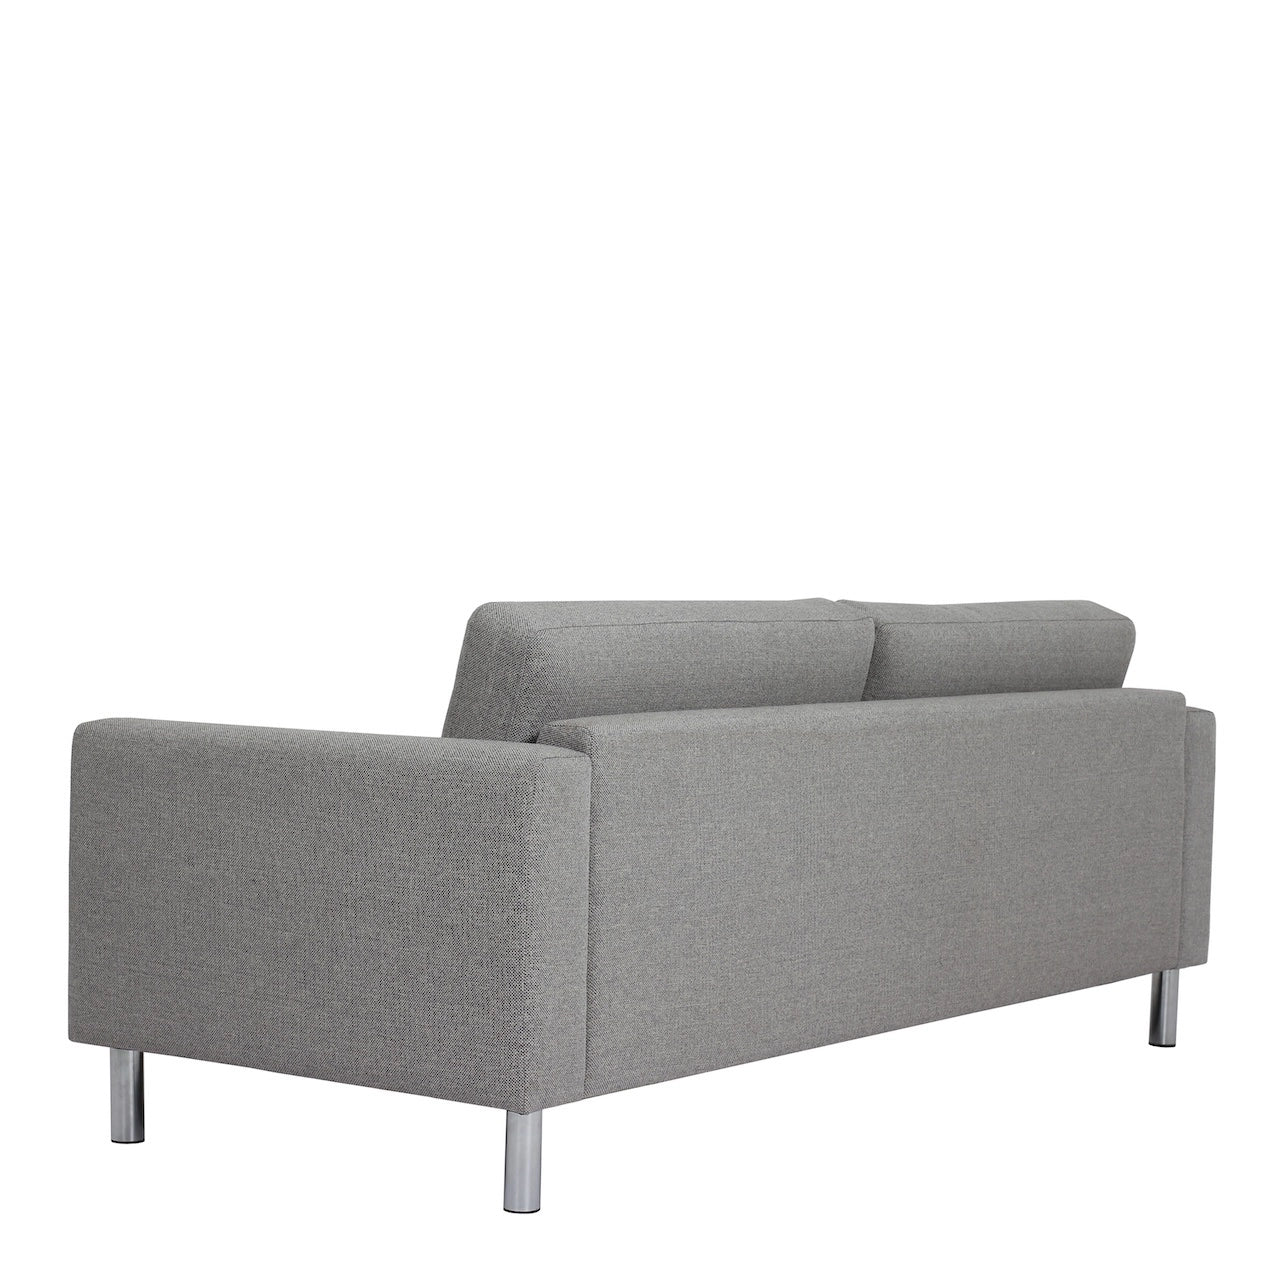 Furniture To Go Cleveland 3-Seater Sofa in Nova Light Grey